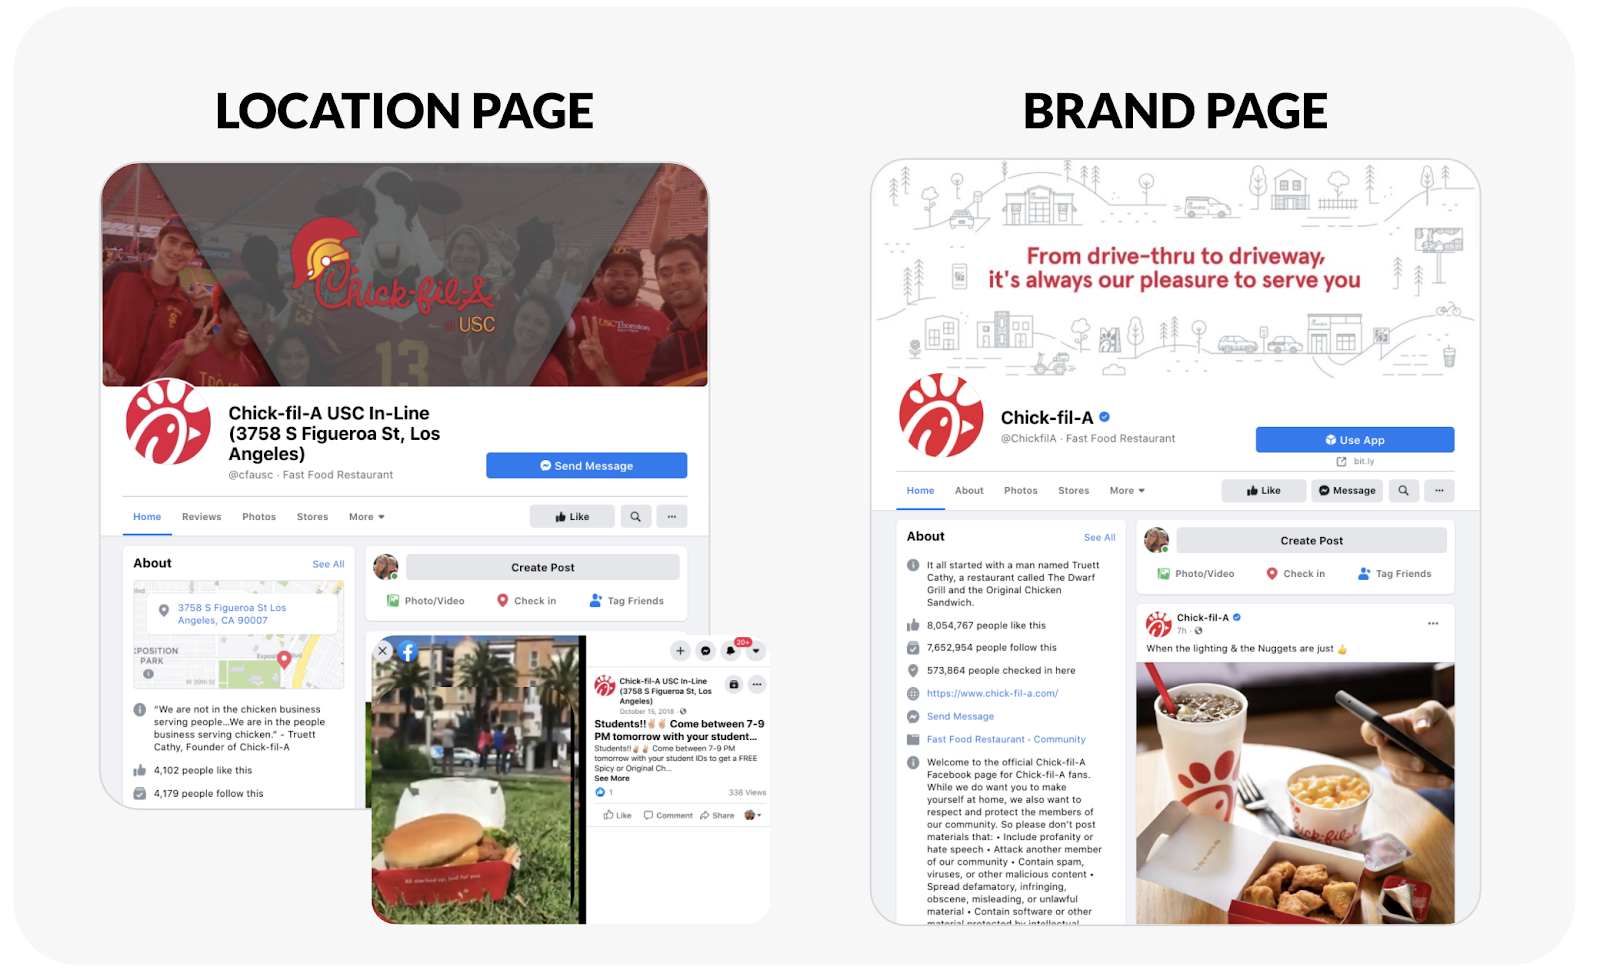 Brand vs location page